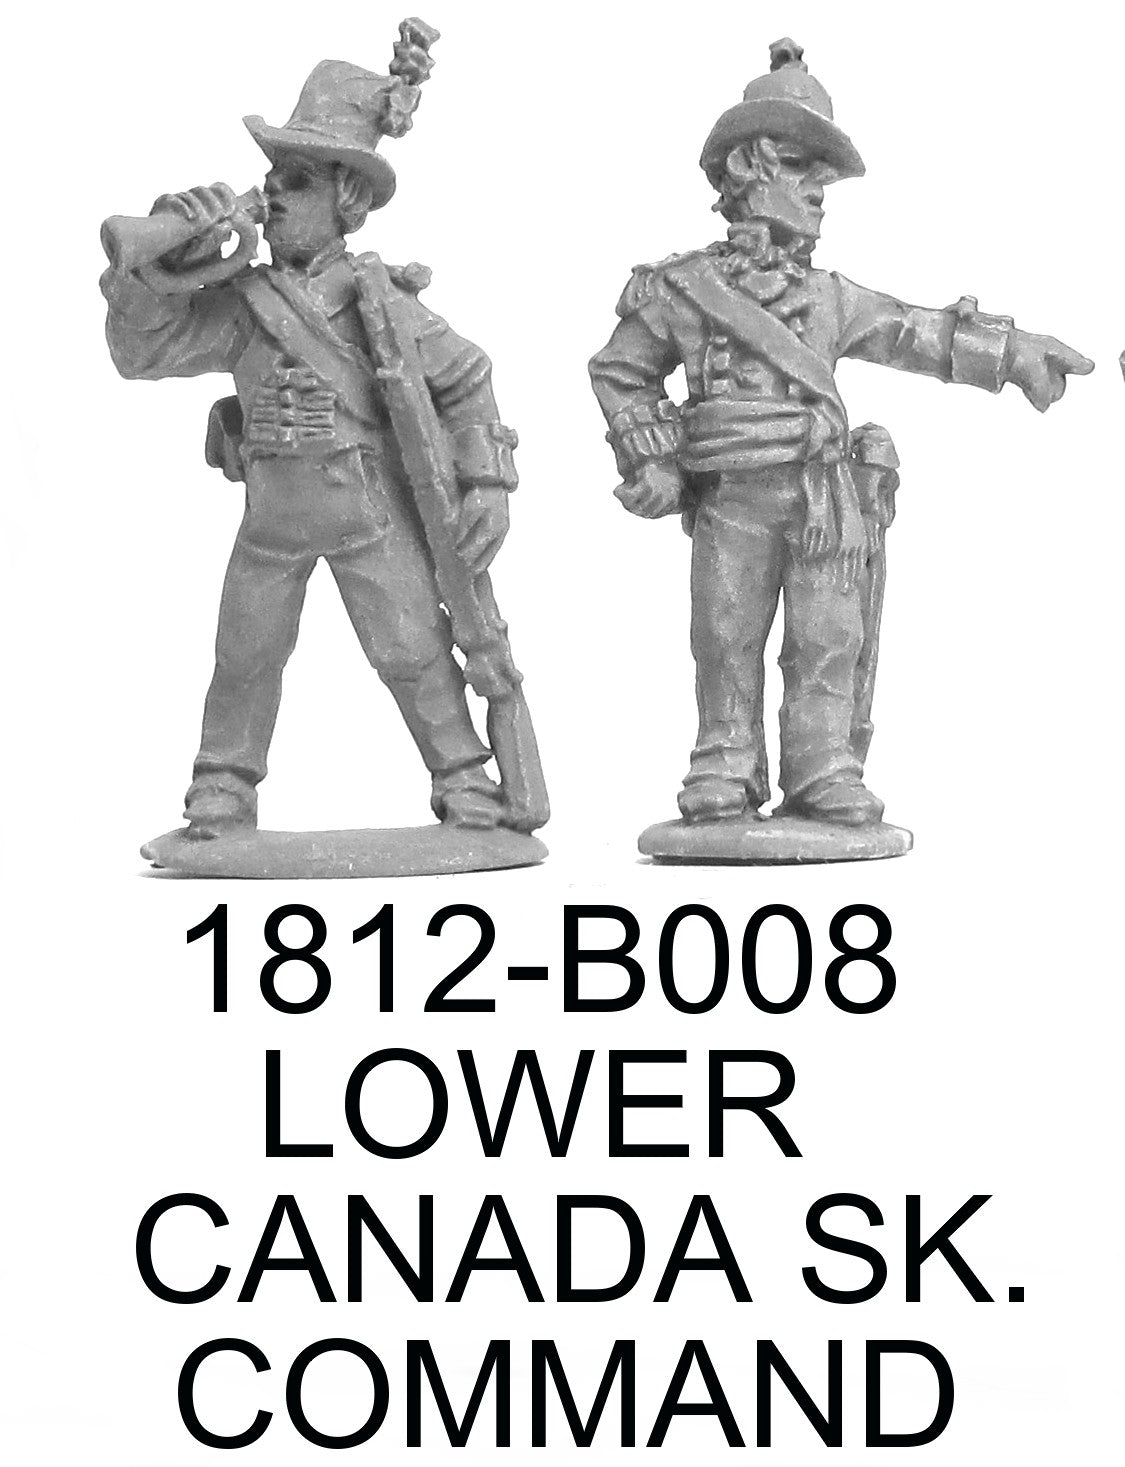 Lower Canada Skirmish Command